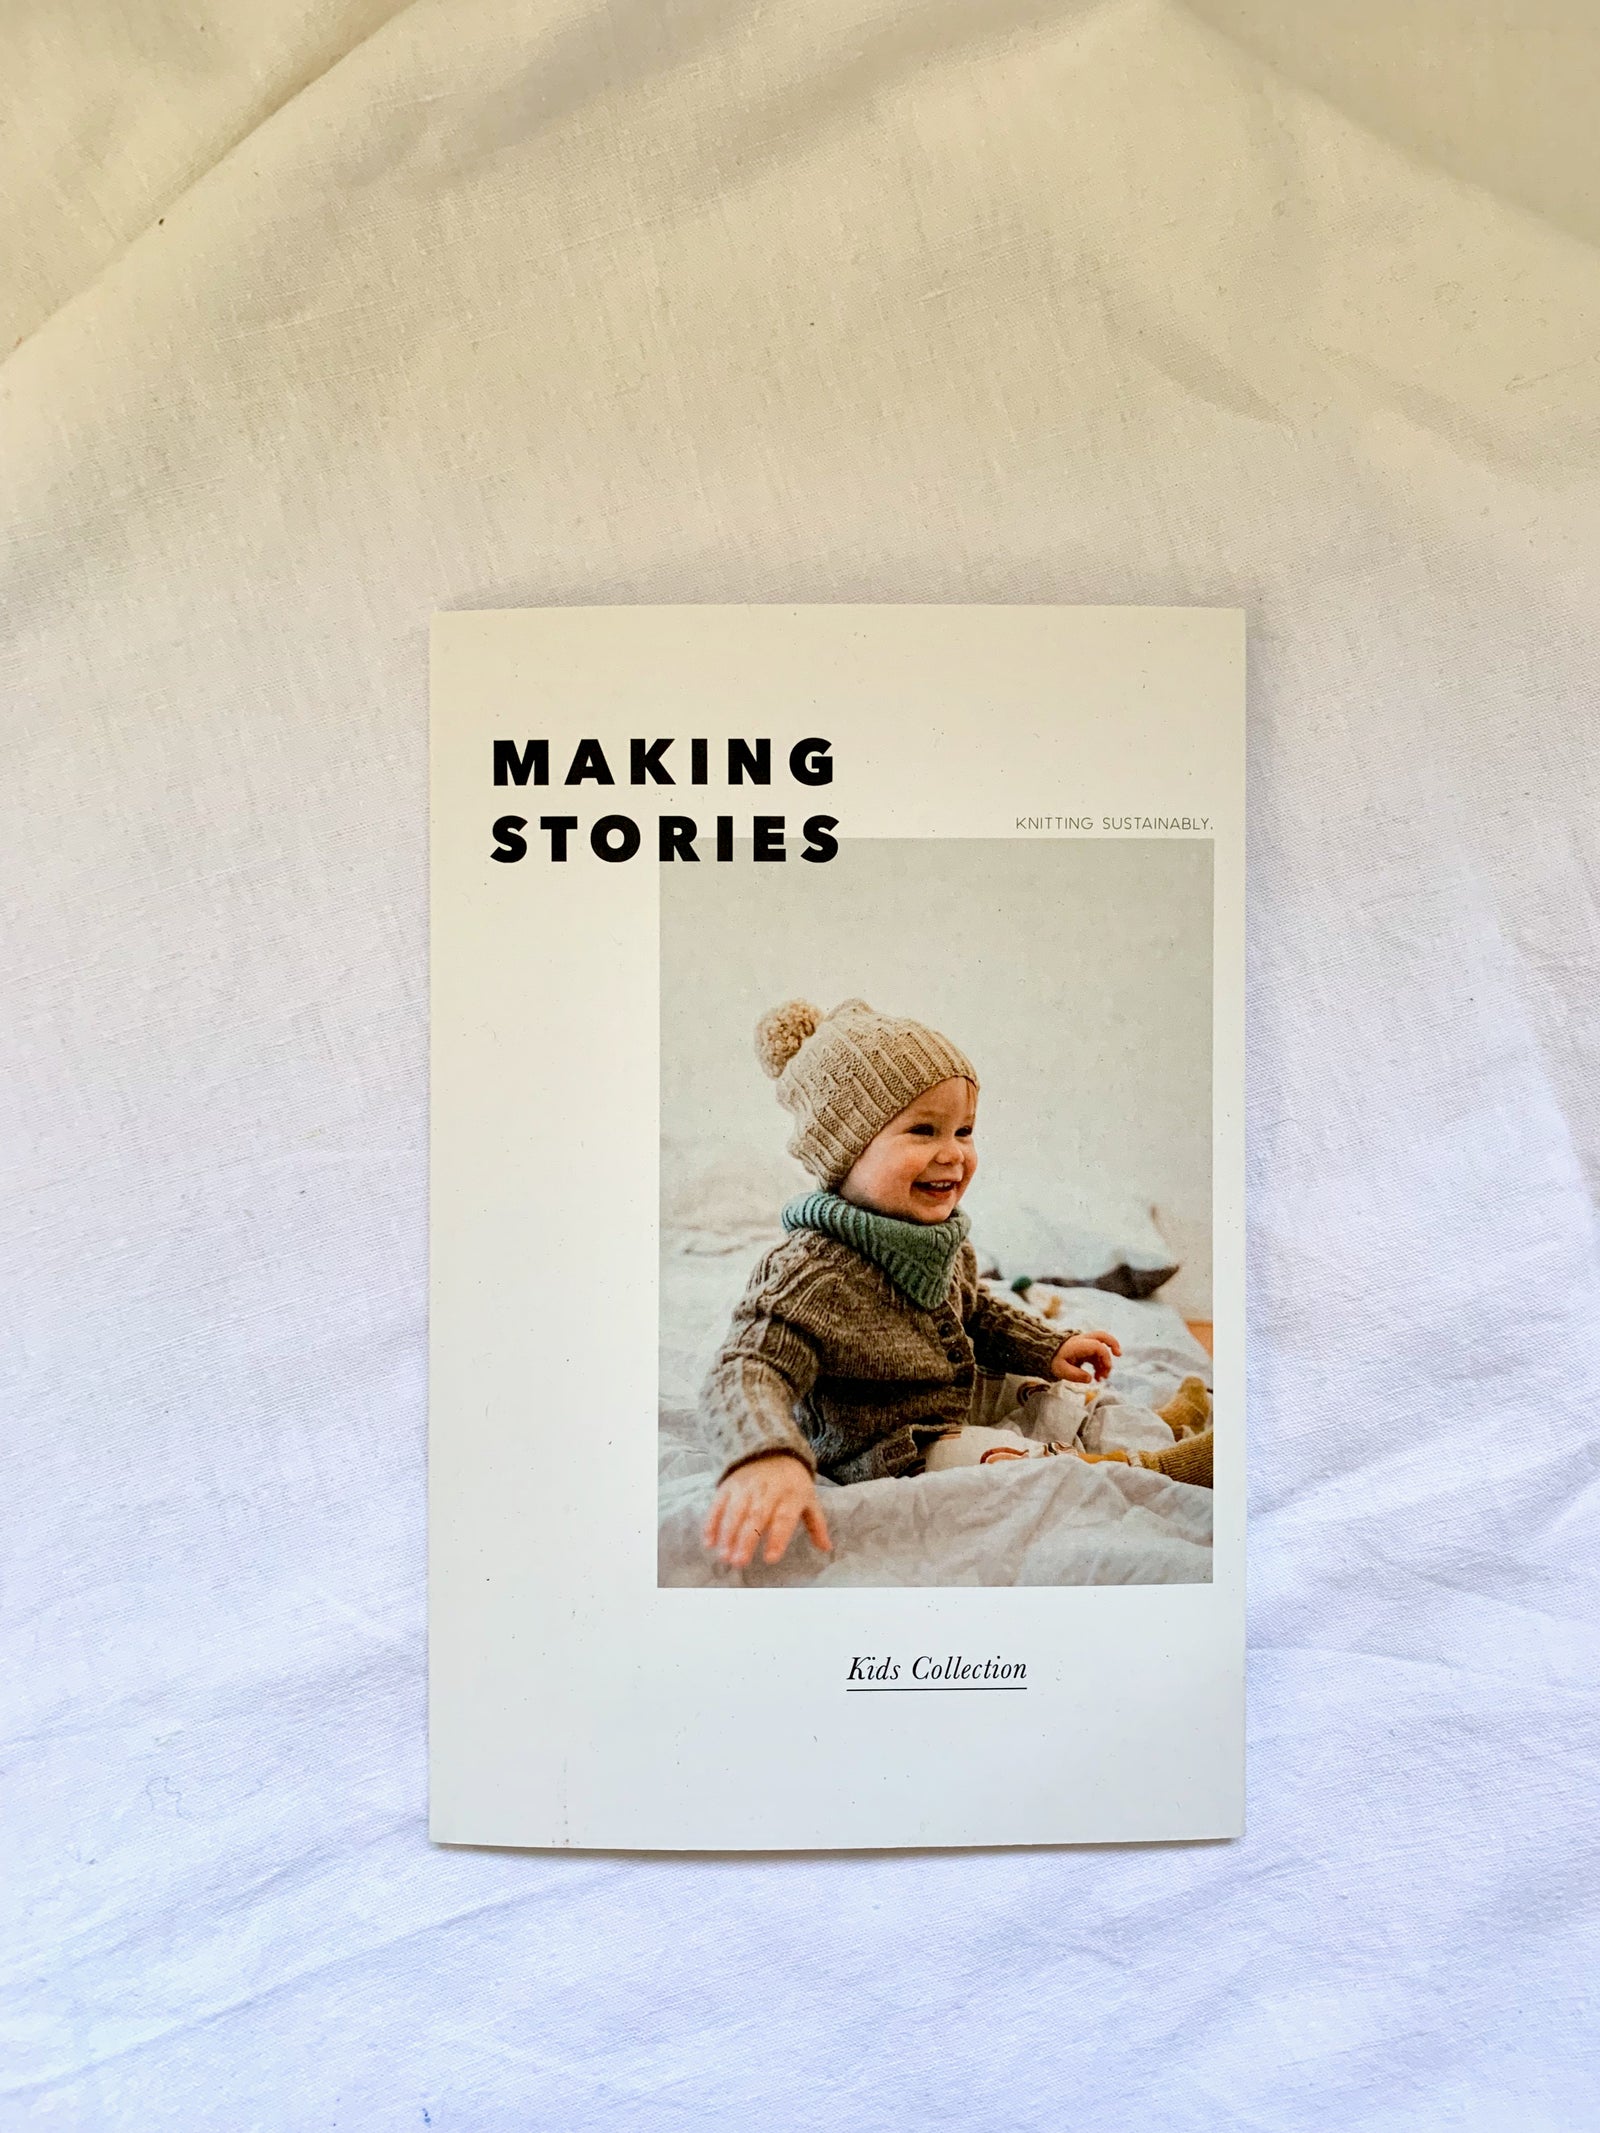 Making Stories Magazine Issue 10 - Making Stories - Knitting Sustainably.